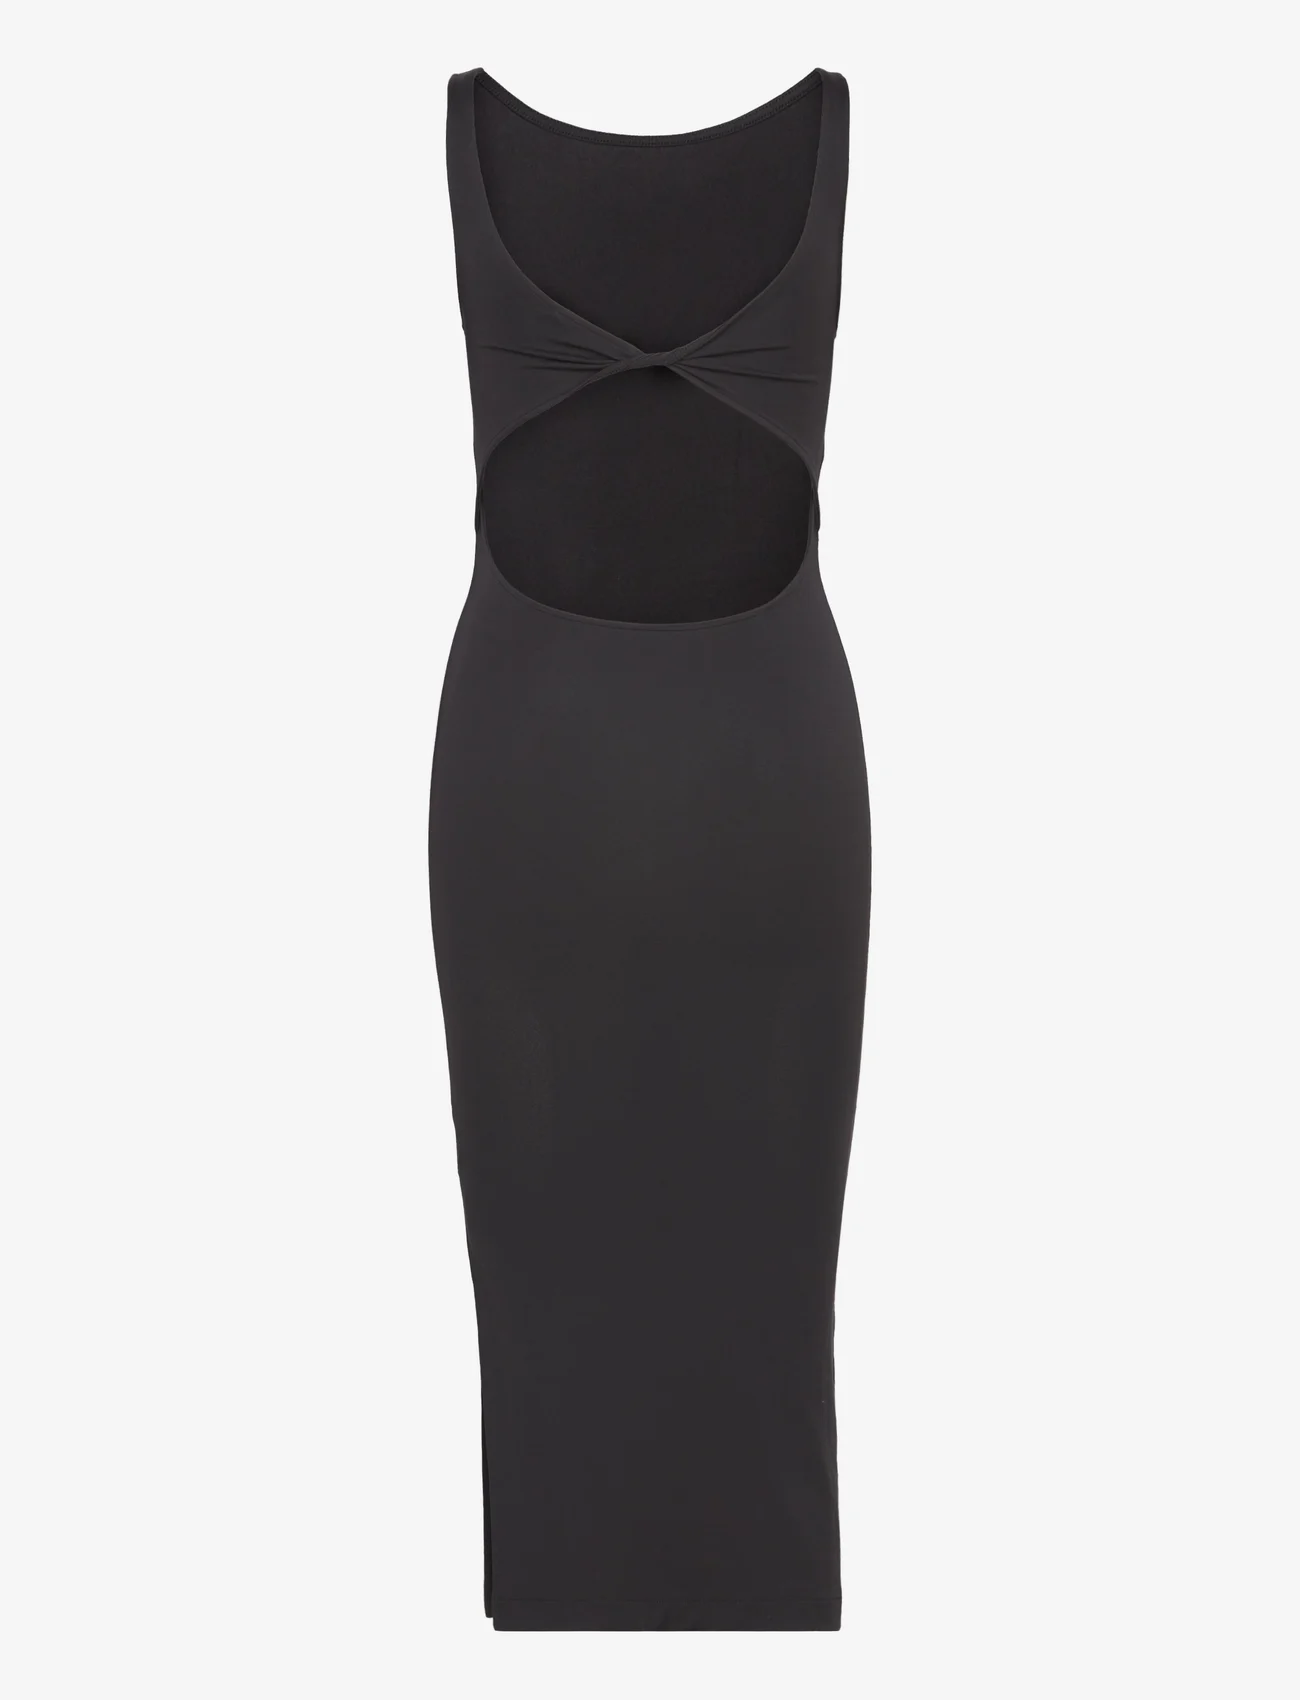 Calvin Klein Jeans - BACK TWIST STRAPPY LONG  DRESS - midi jurken - ck black - 1